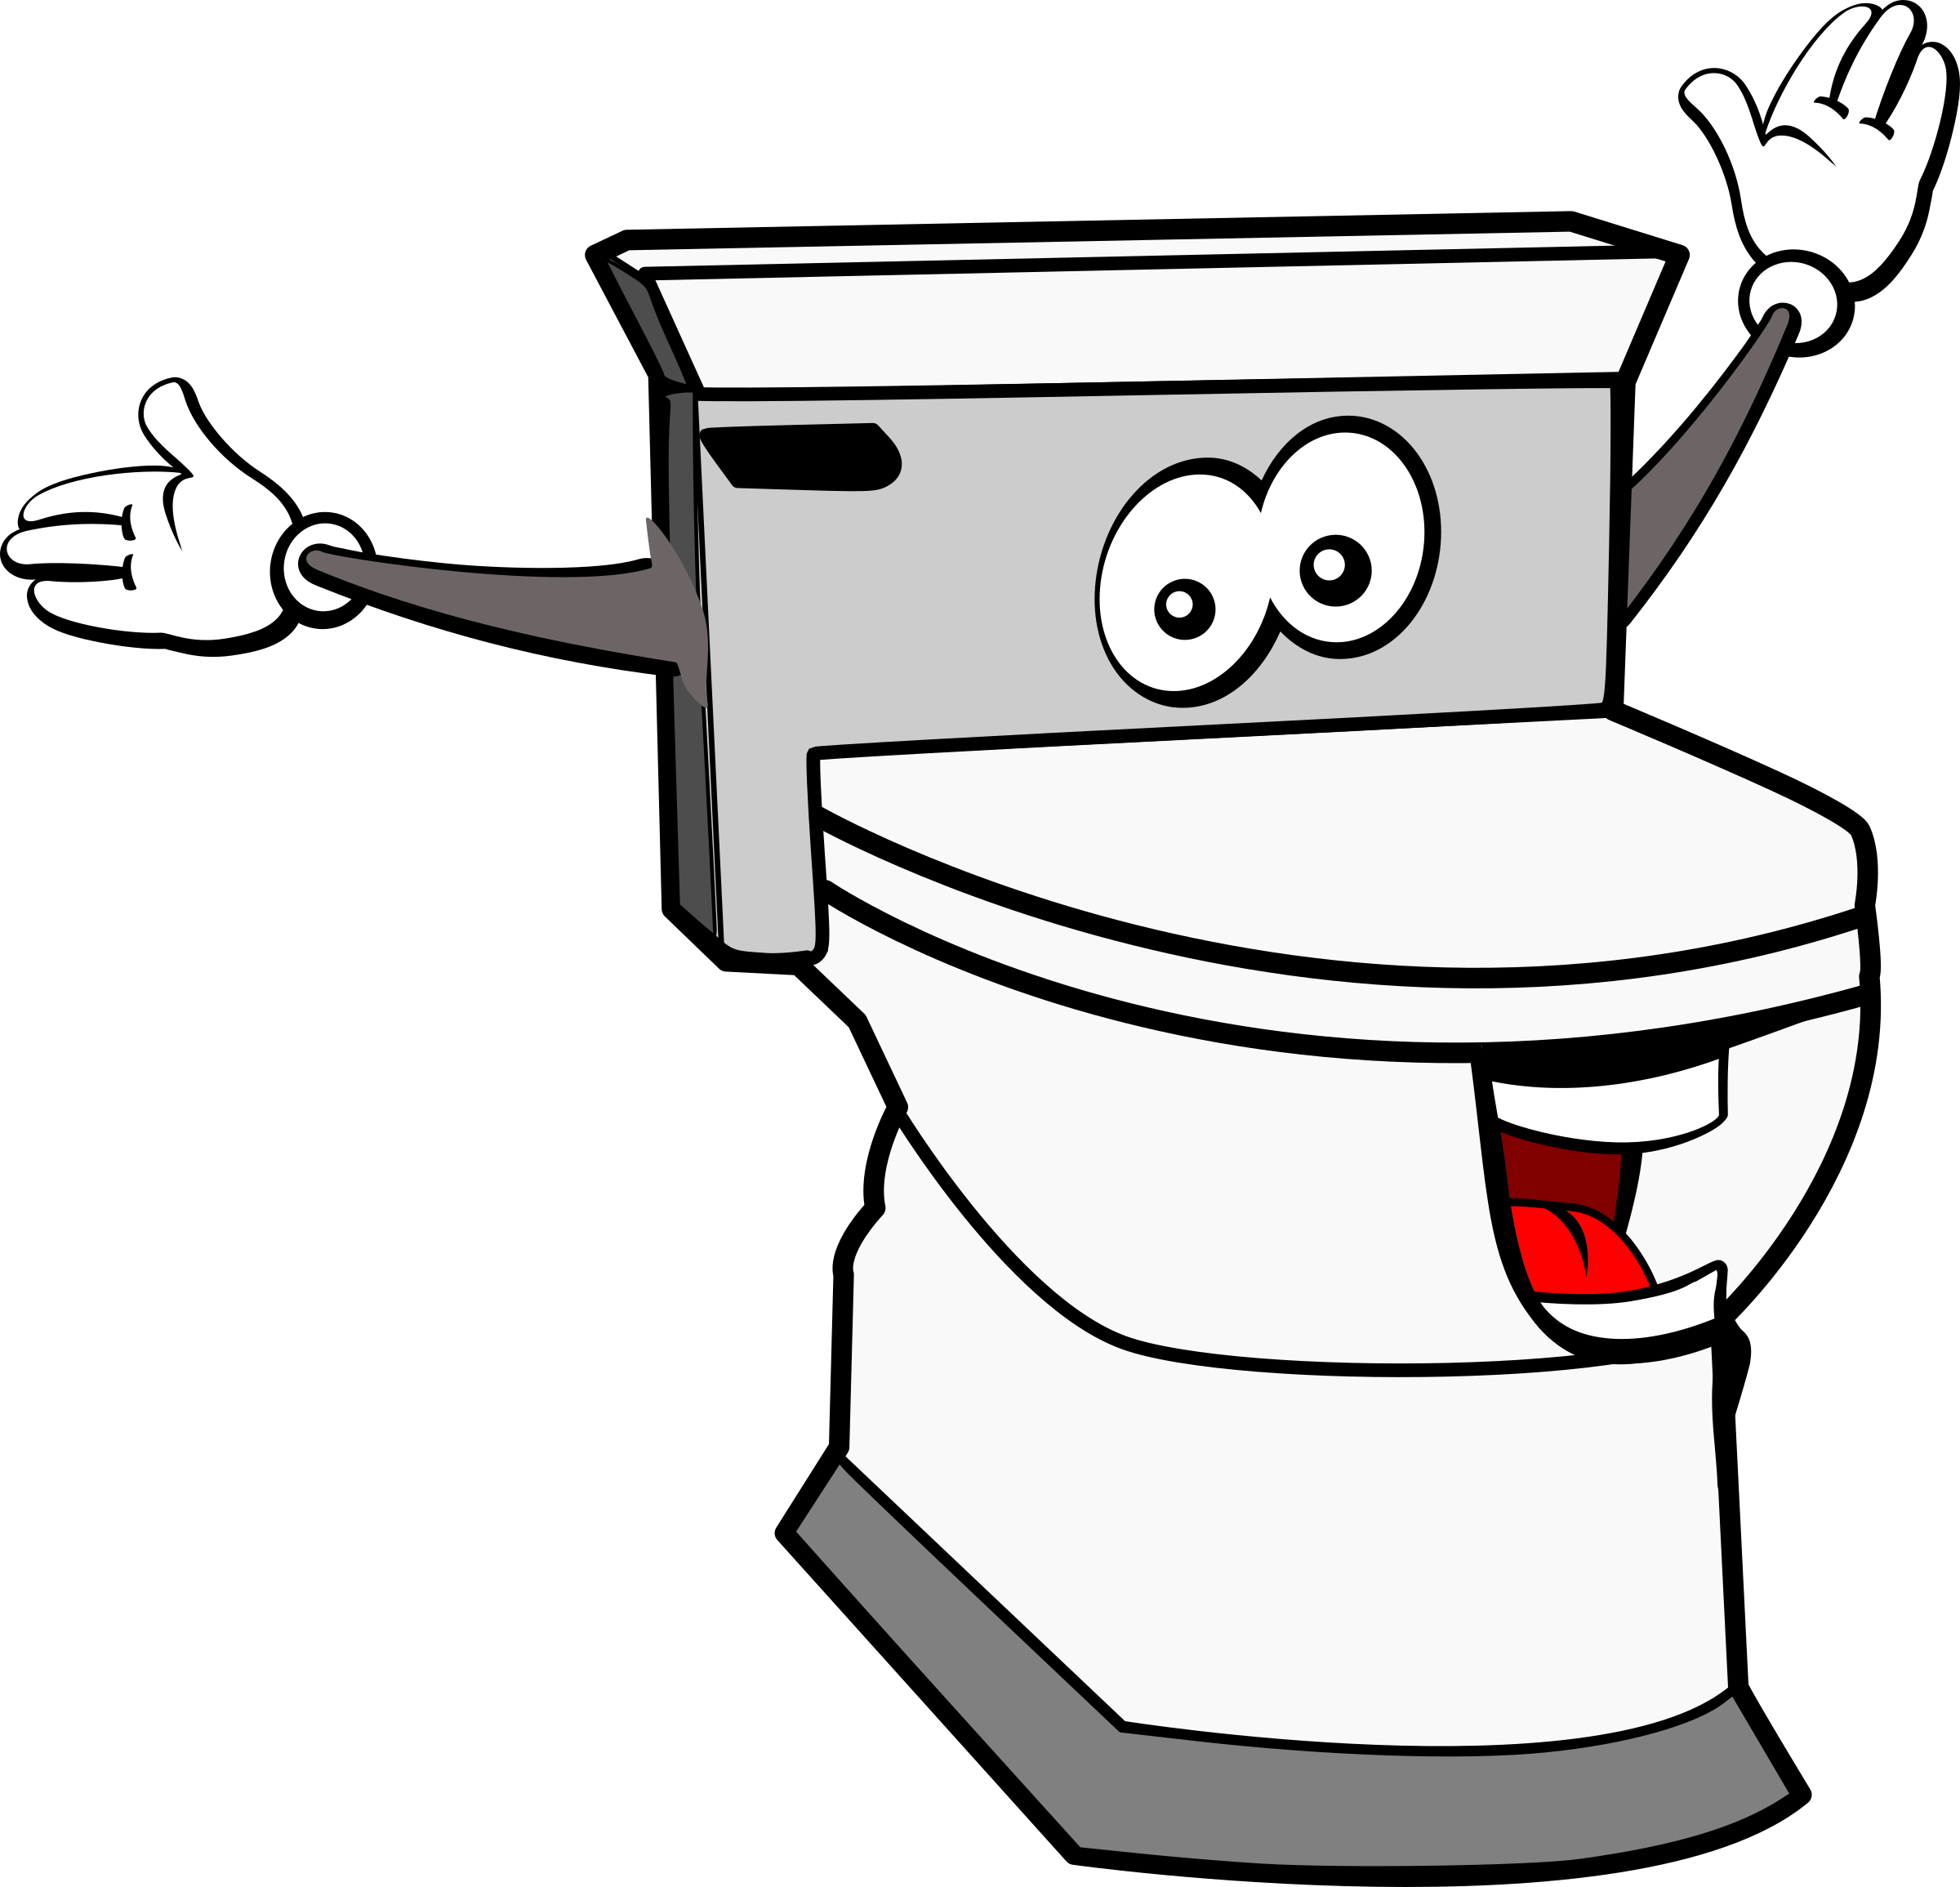 cartoon toilet images clipart download best cartoon toilet images clipart clipartmagm #29278